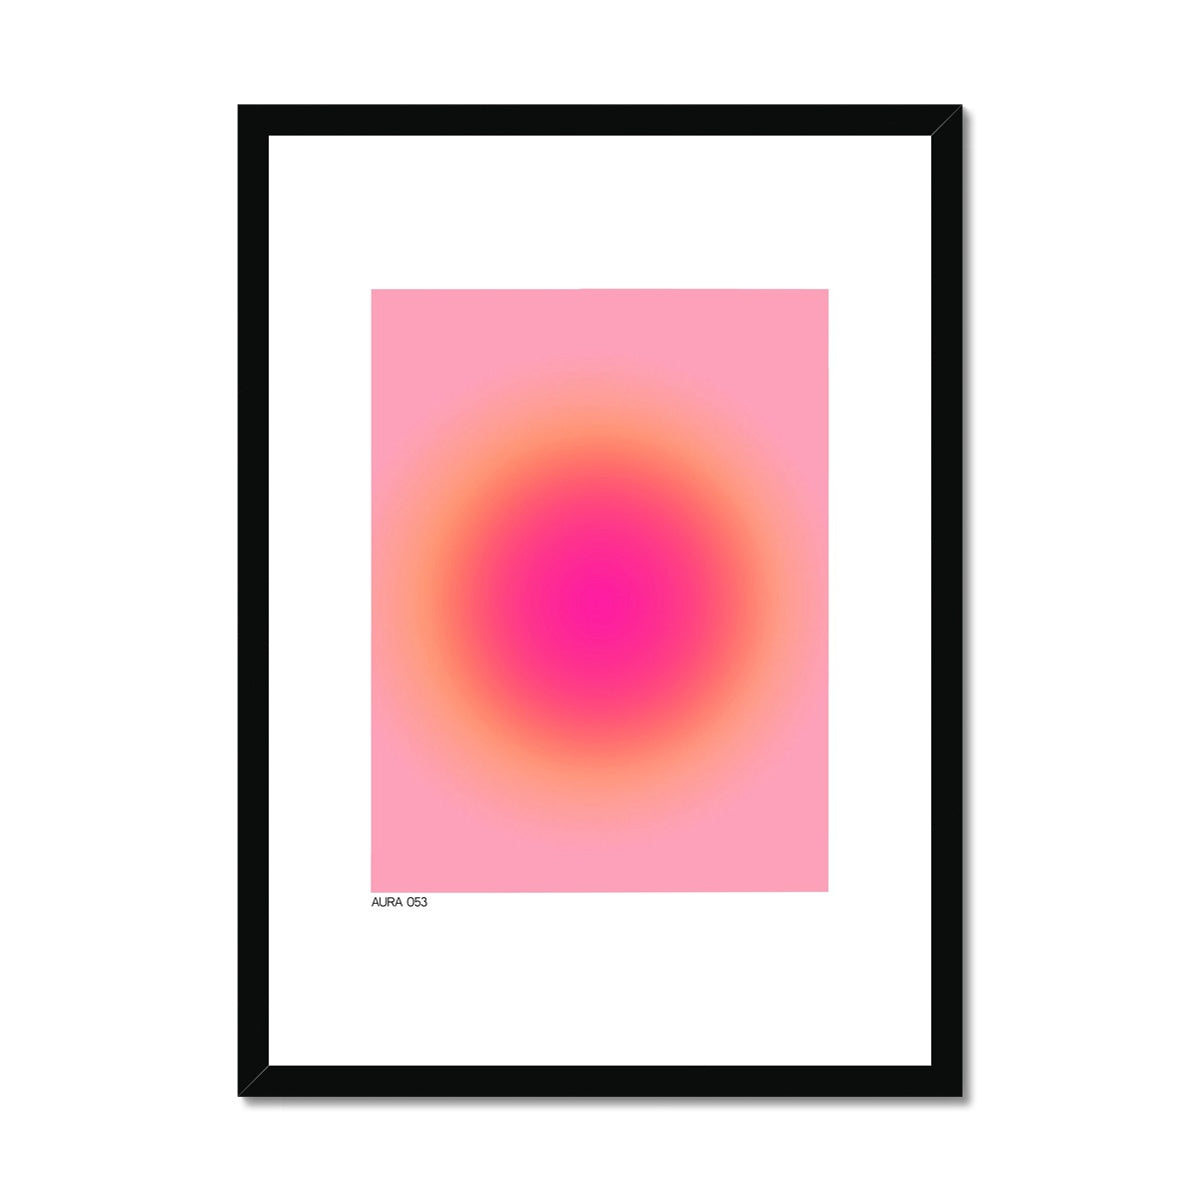 aura 053 Framed & Mounted Print